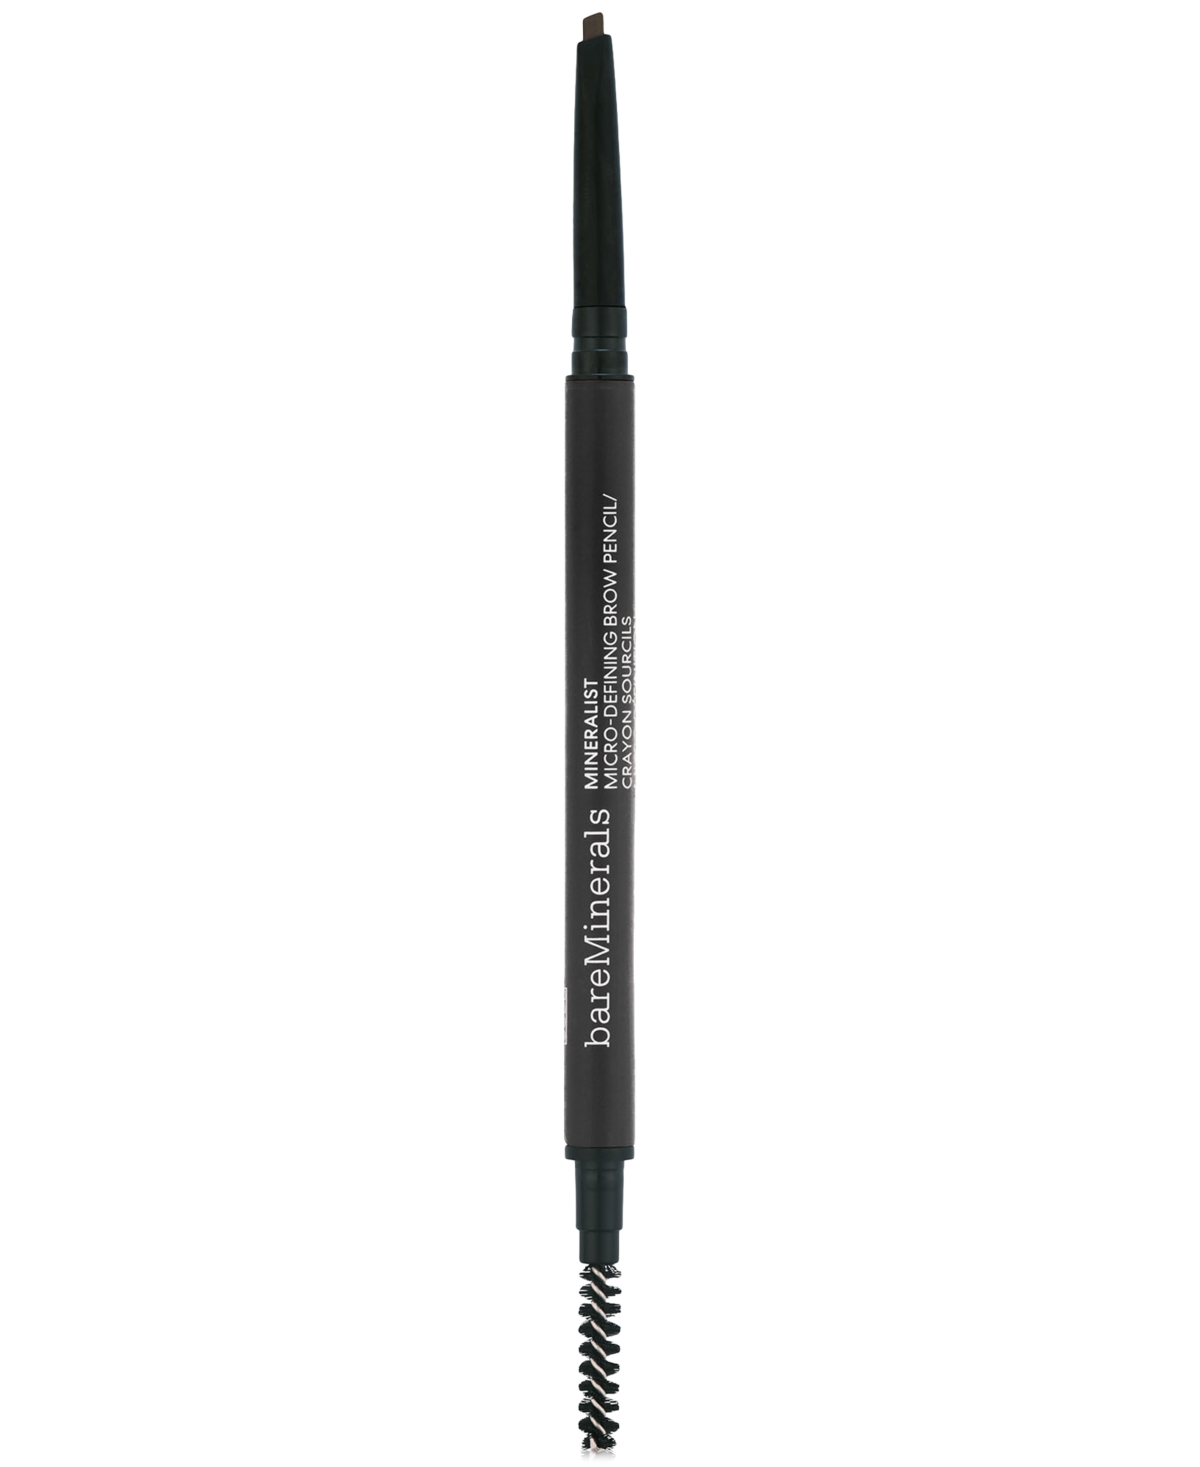 Bareminerals Mineralist Micro-defining Brow Pencil In Rich Black